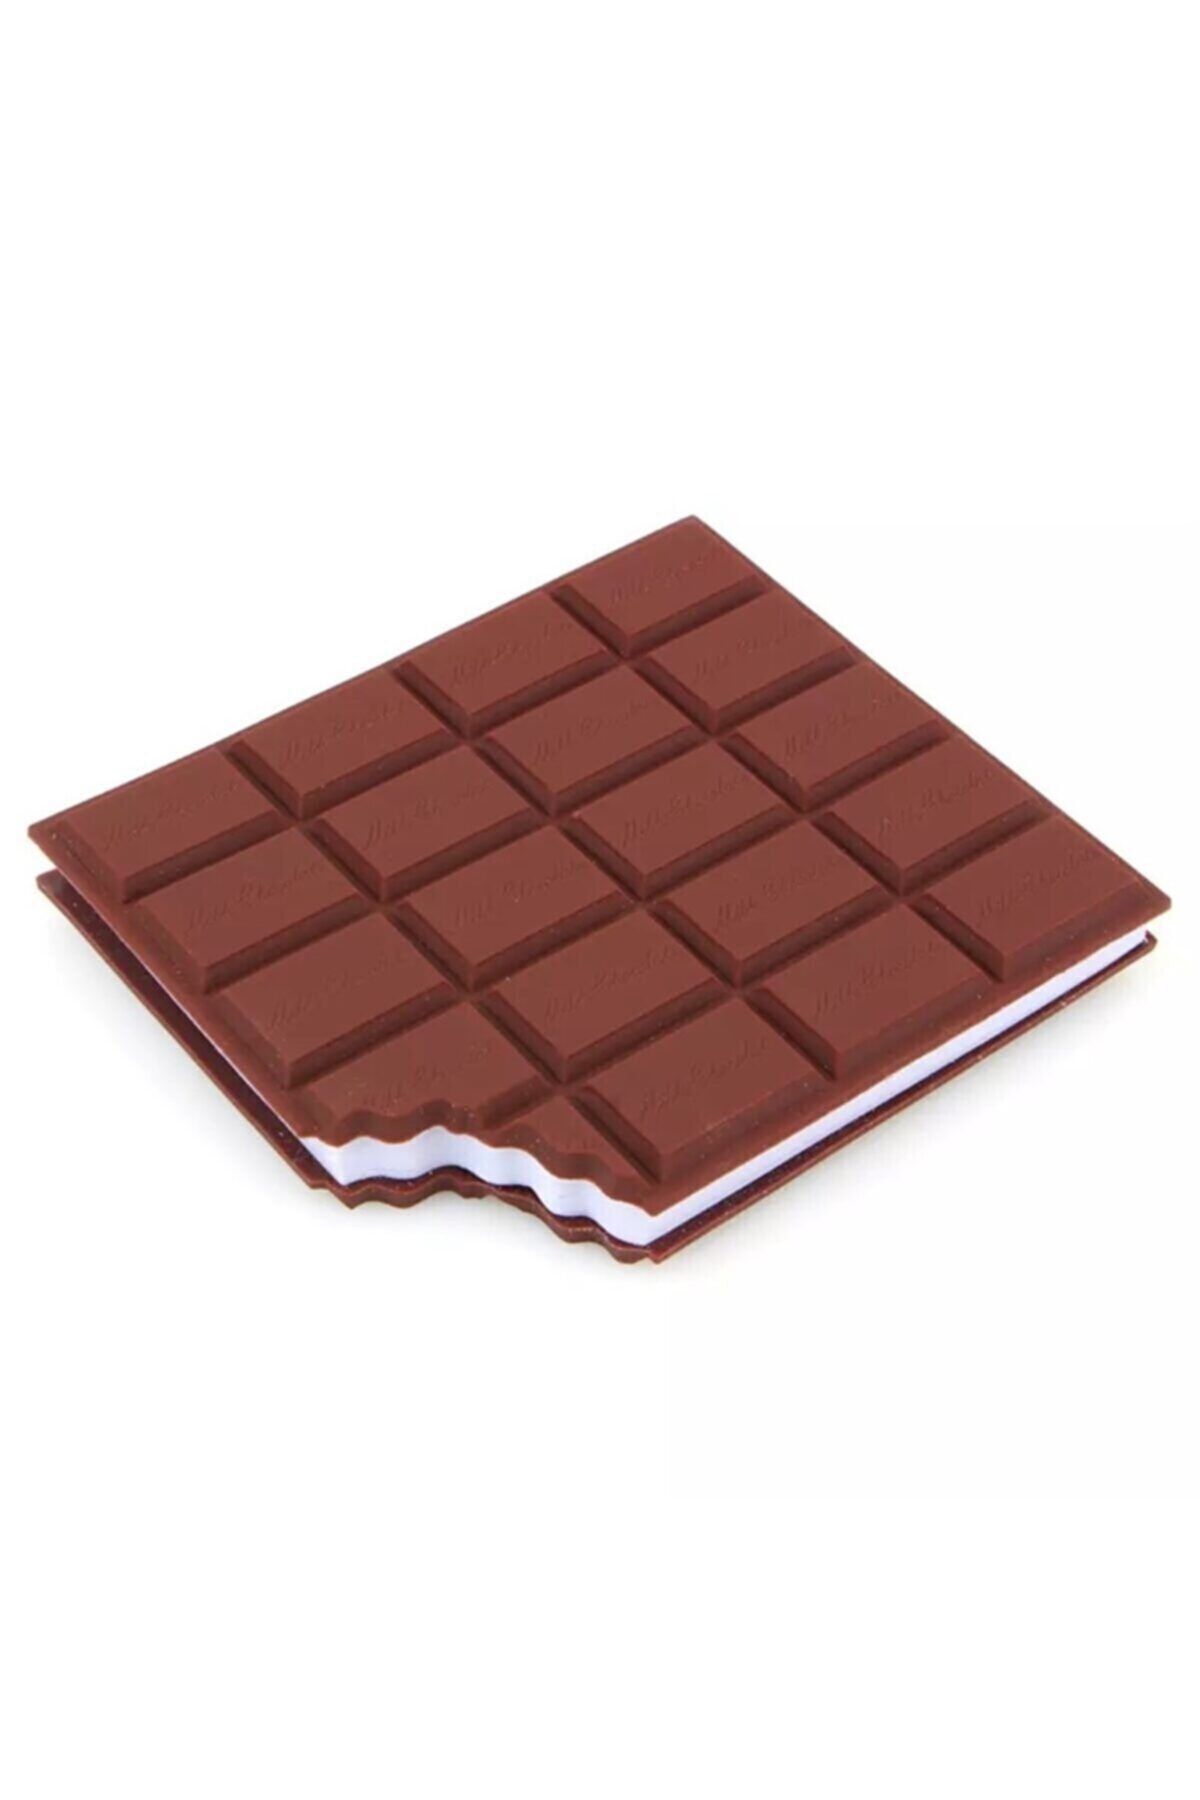 Jetcom Çikolata Şeklinde Kokulu Not Defteri 8,5*10 Cm